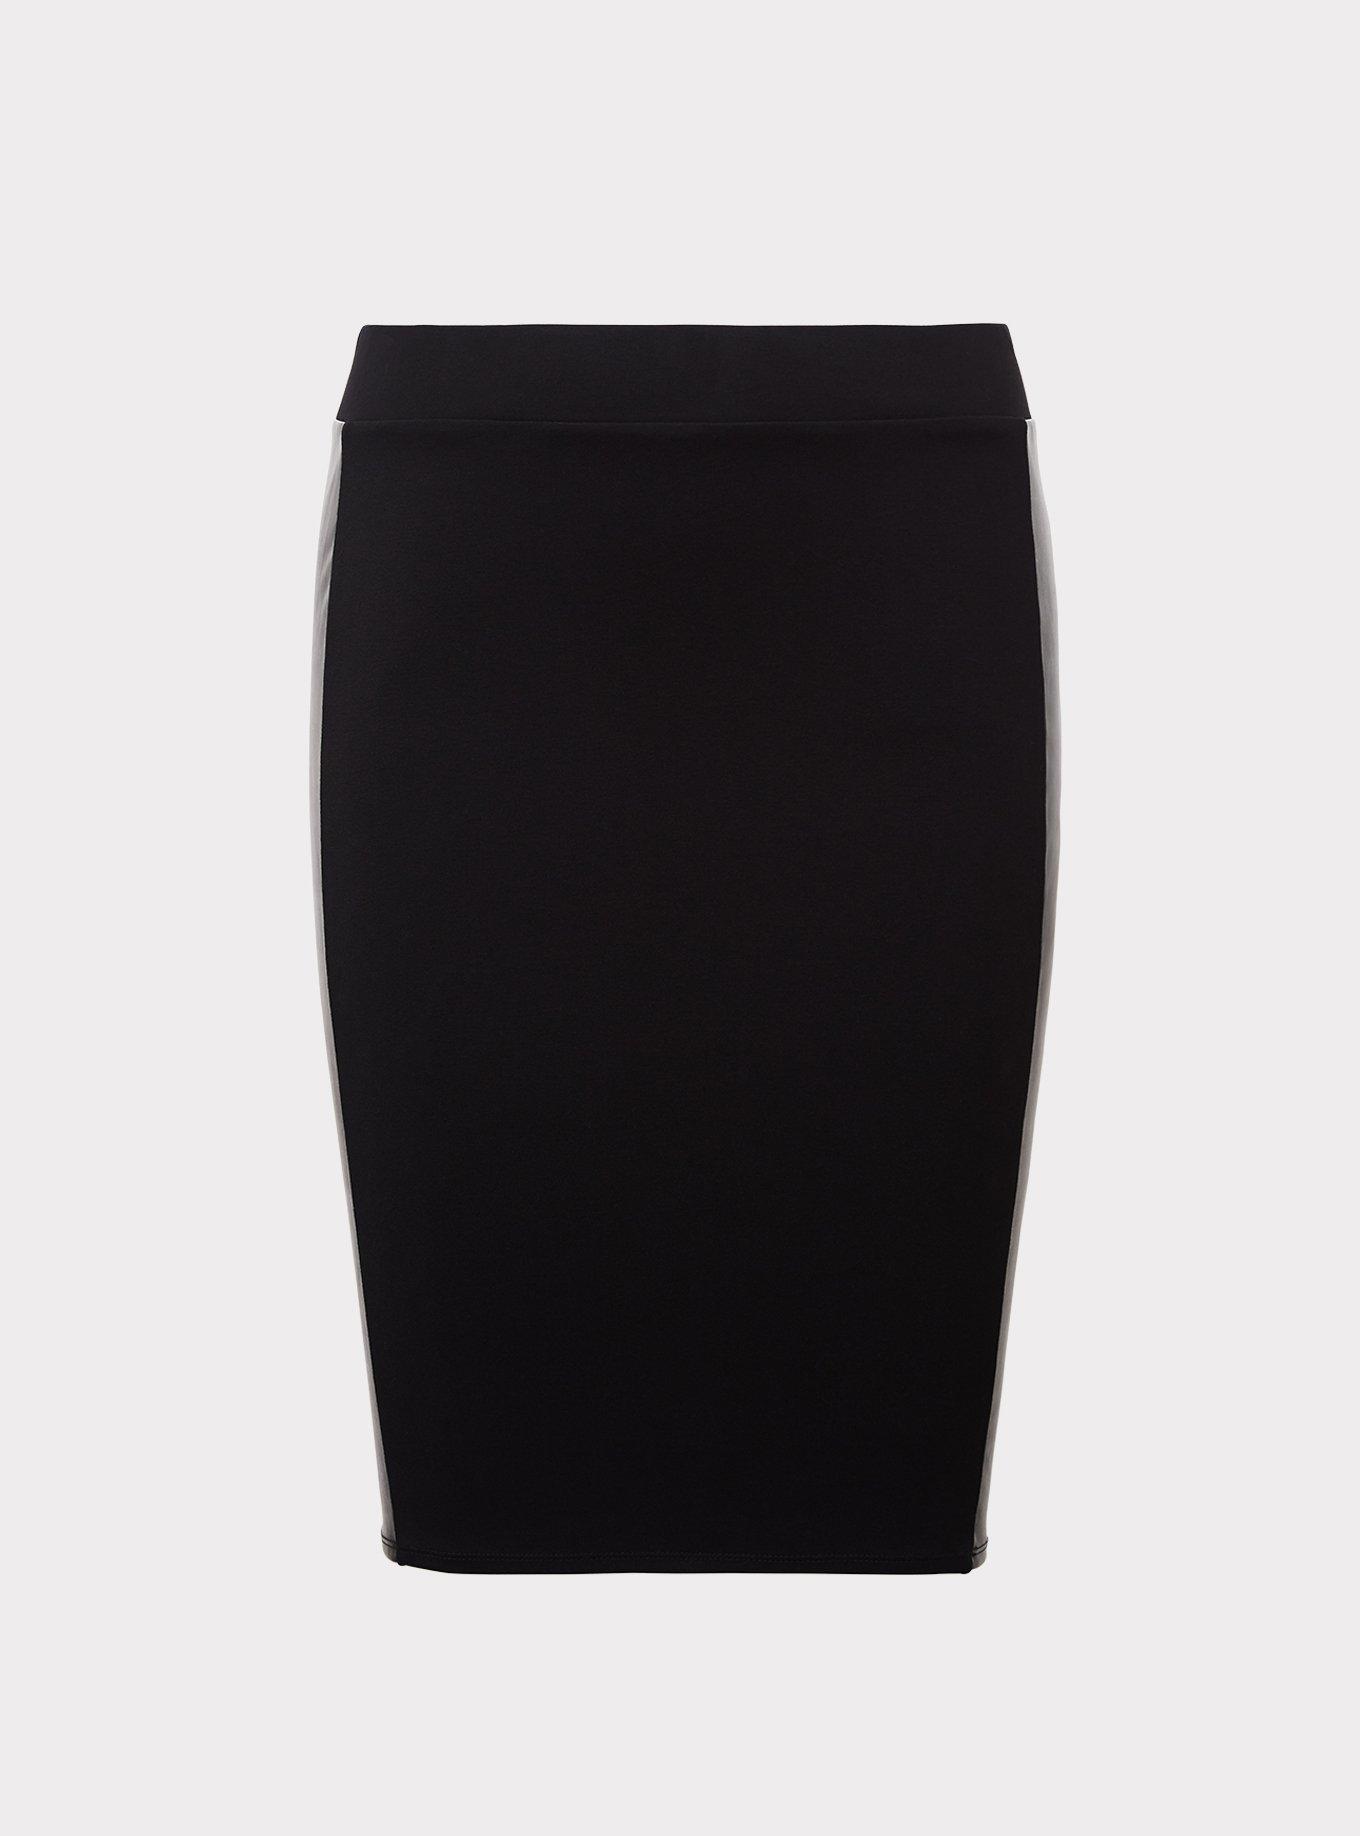 Torrid Slim Fix Pencil Skirt  Fitted pencil skirts, Pencil skirt